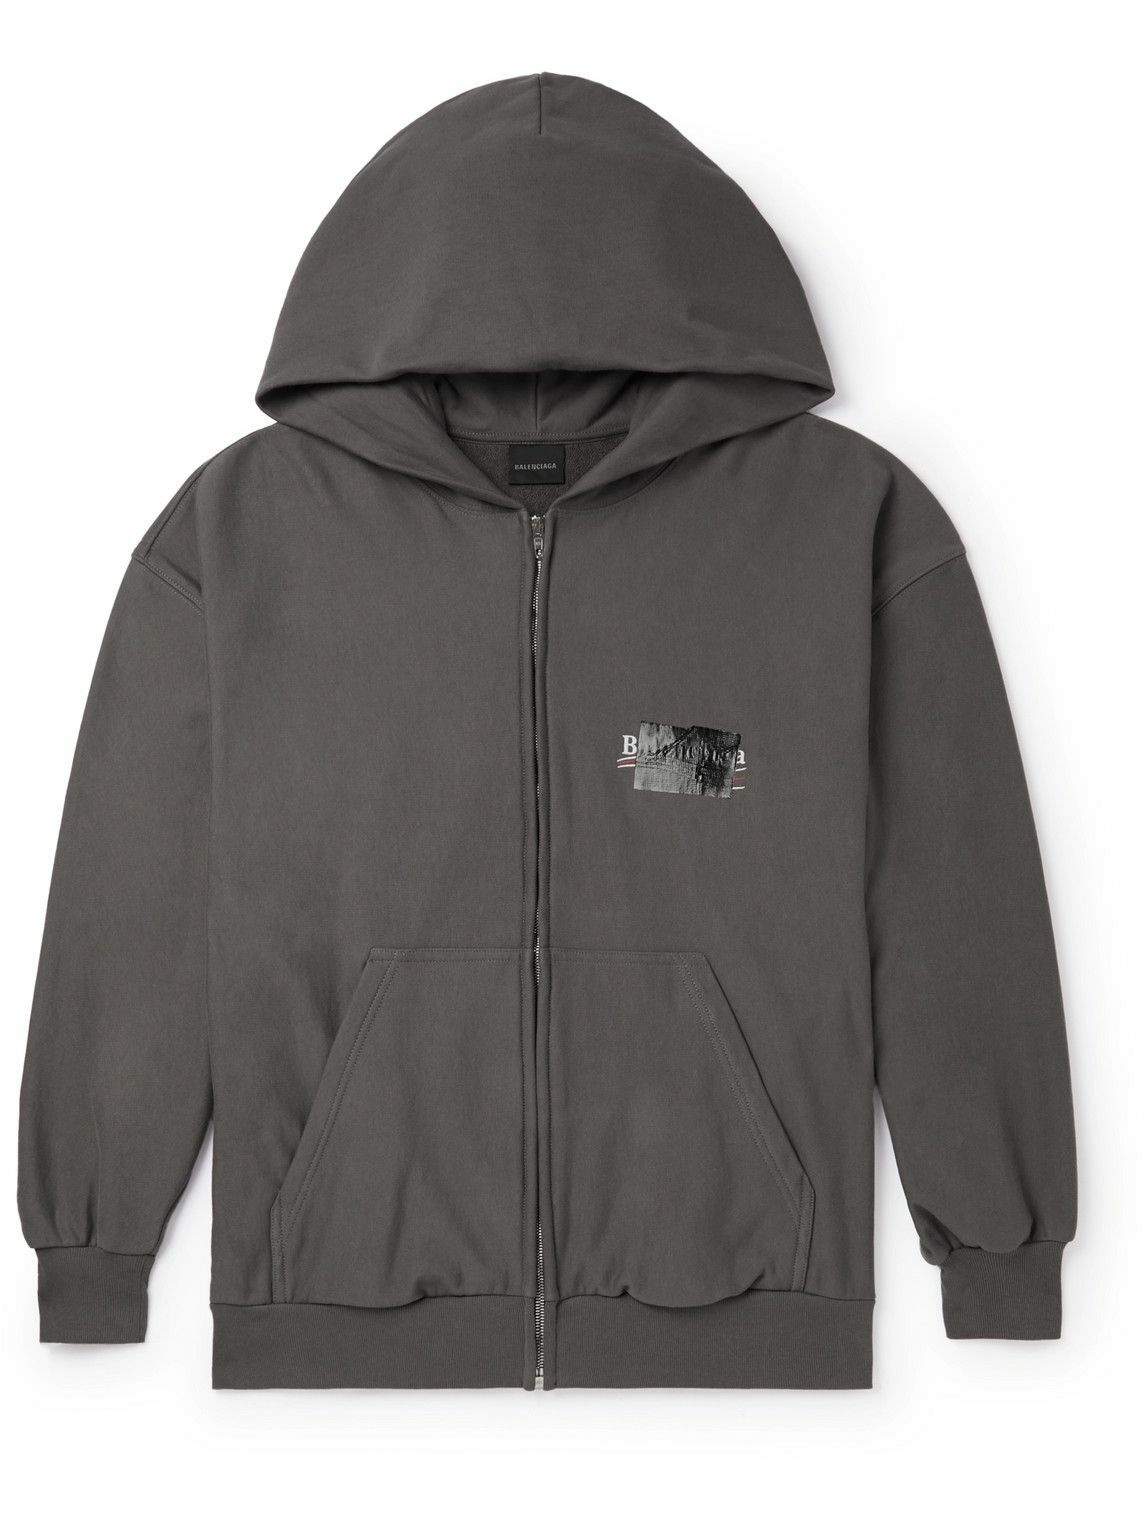 Black Tape-logo distressed cotton-jersey hoodie, Balenciaga